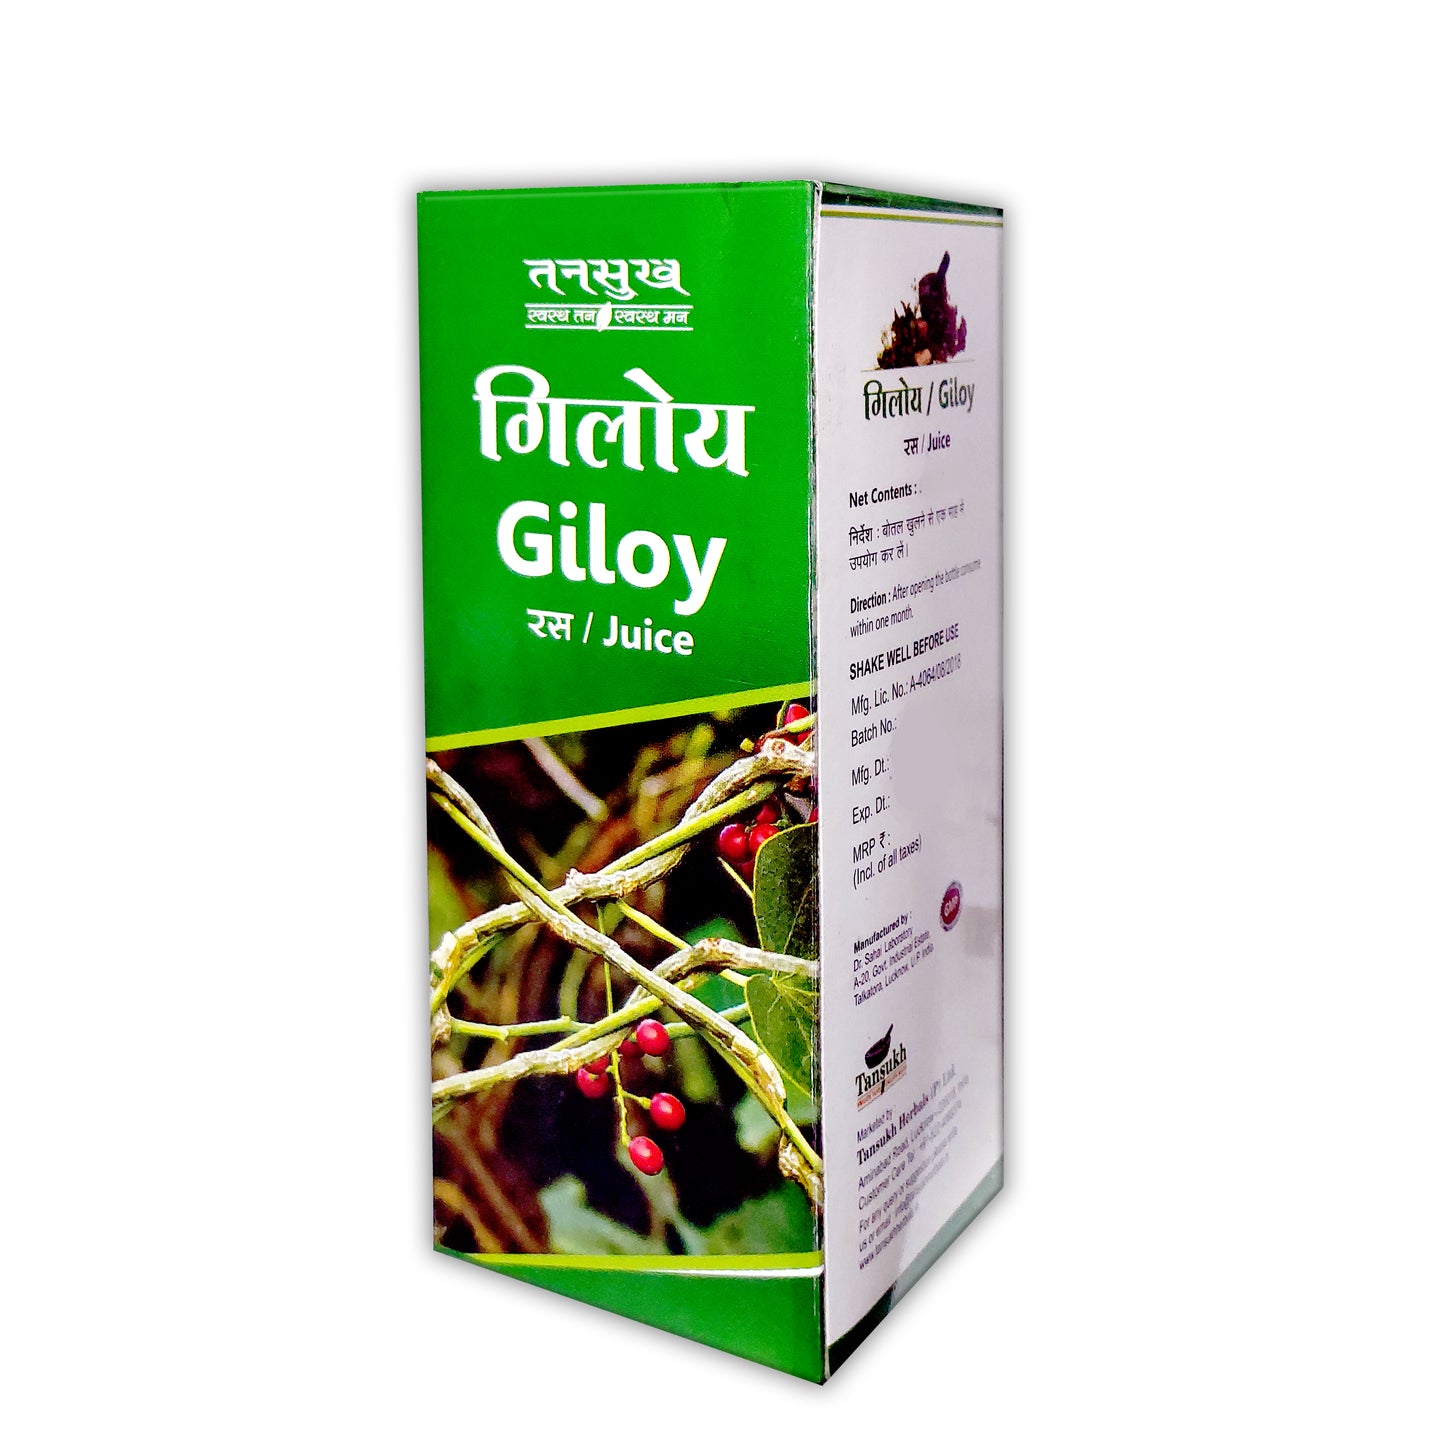 Giloy Juice Tansukh Giloy Juice Swaras